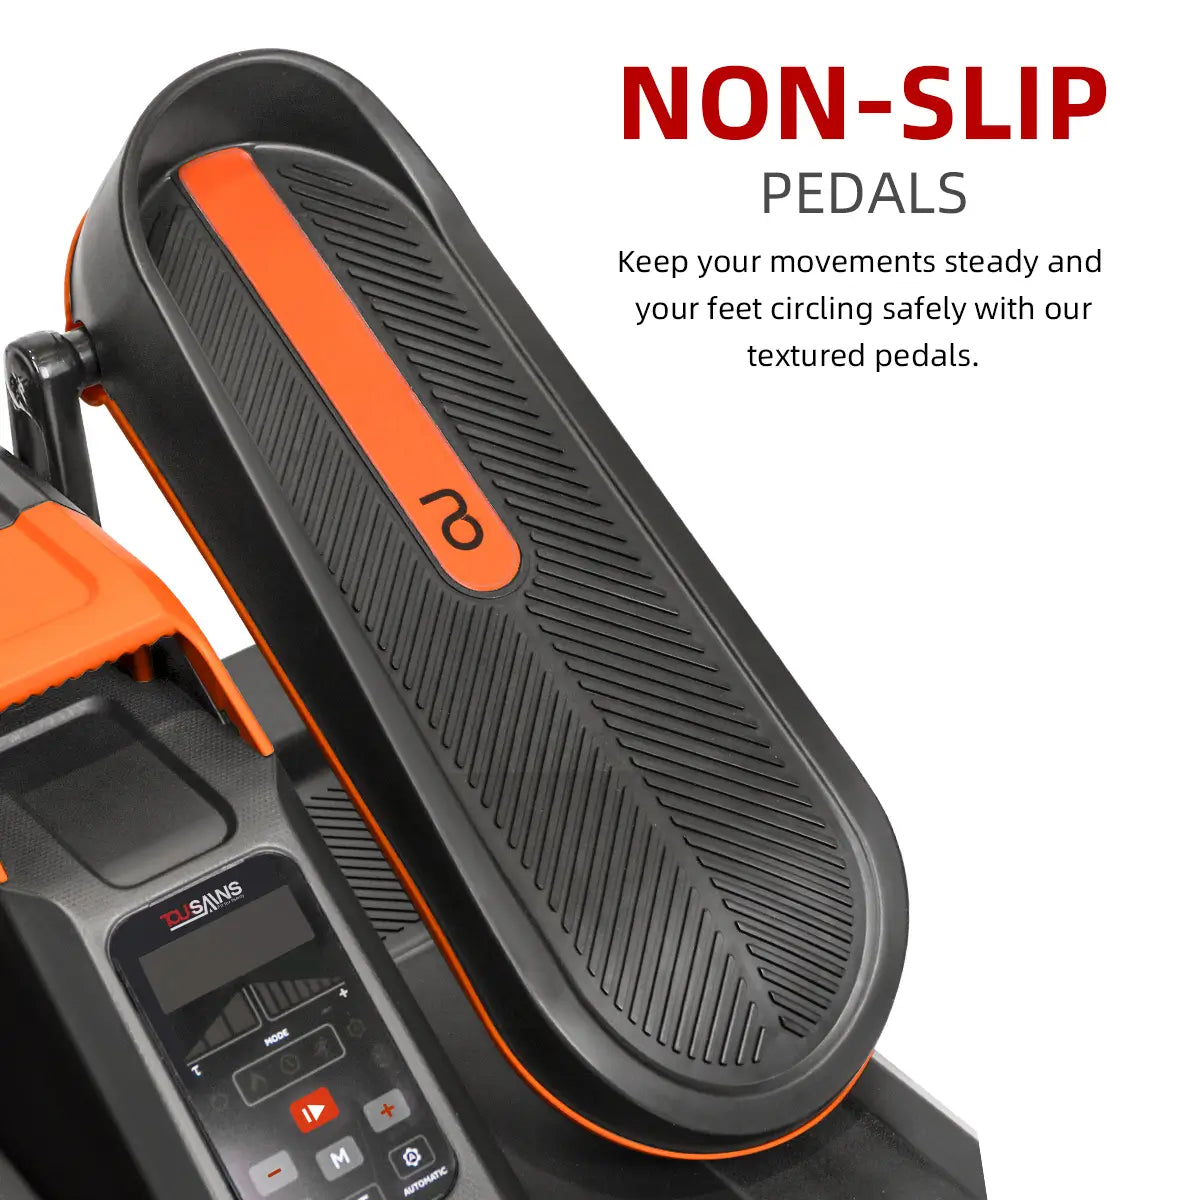 Tousains mini elliptical machine with non-slip pedals